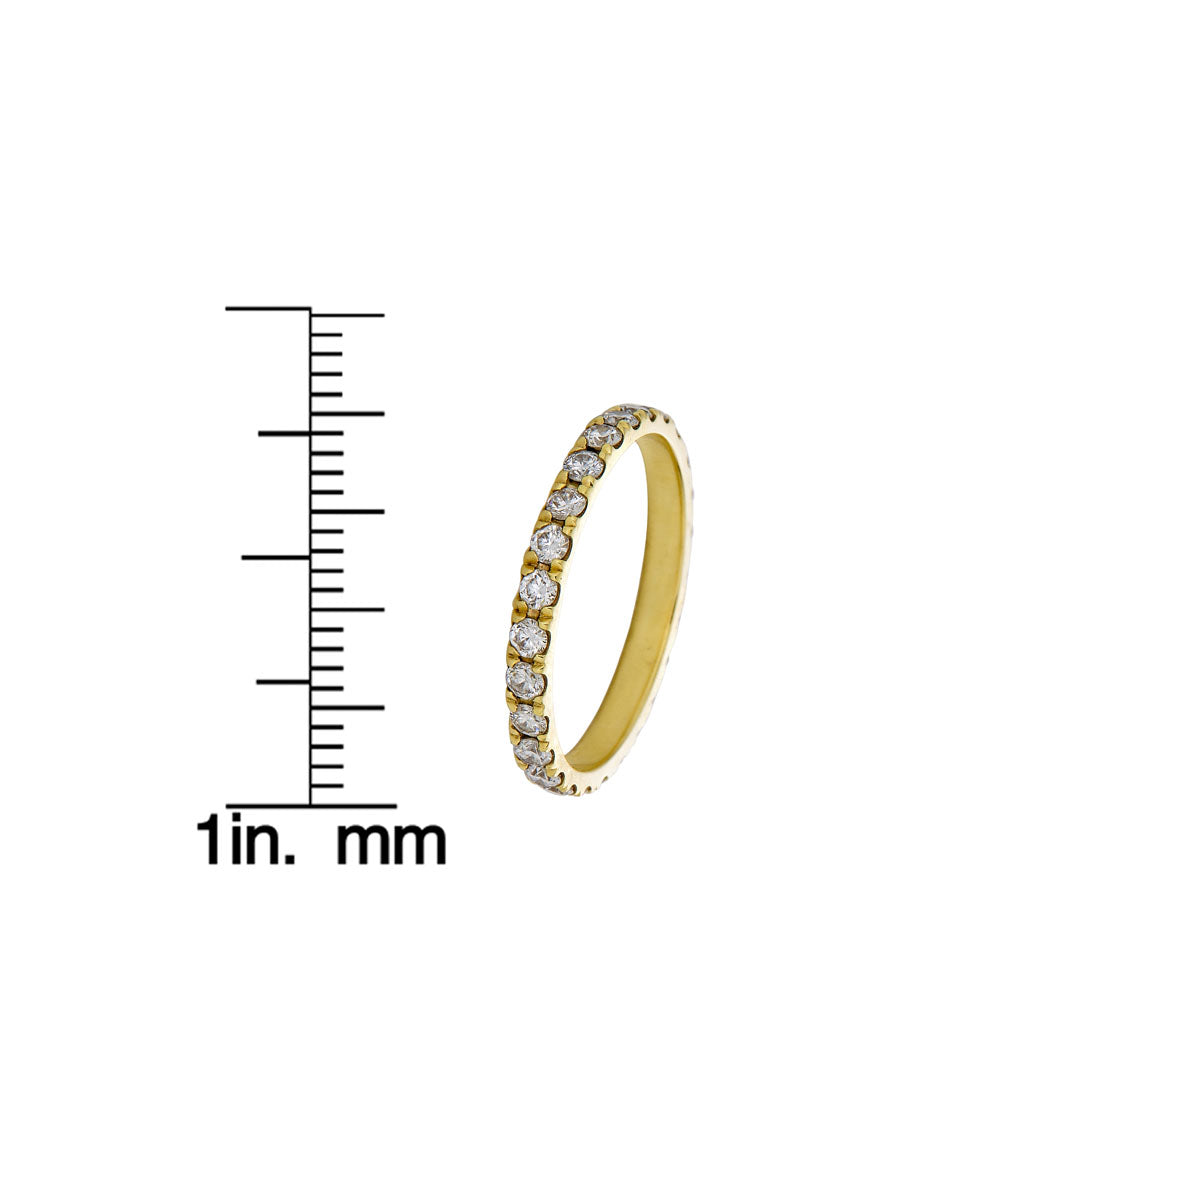 3pt diamond gold eternity band side view measurement